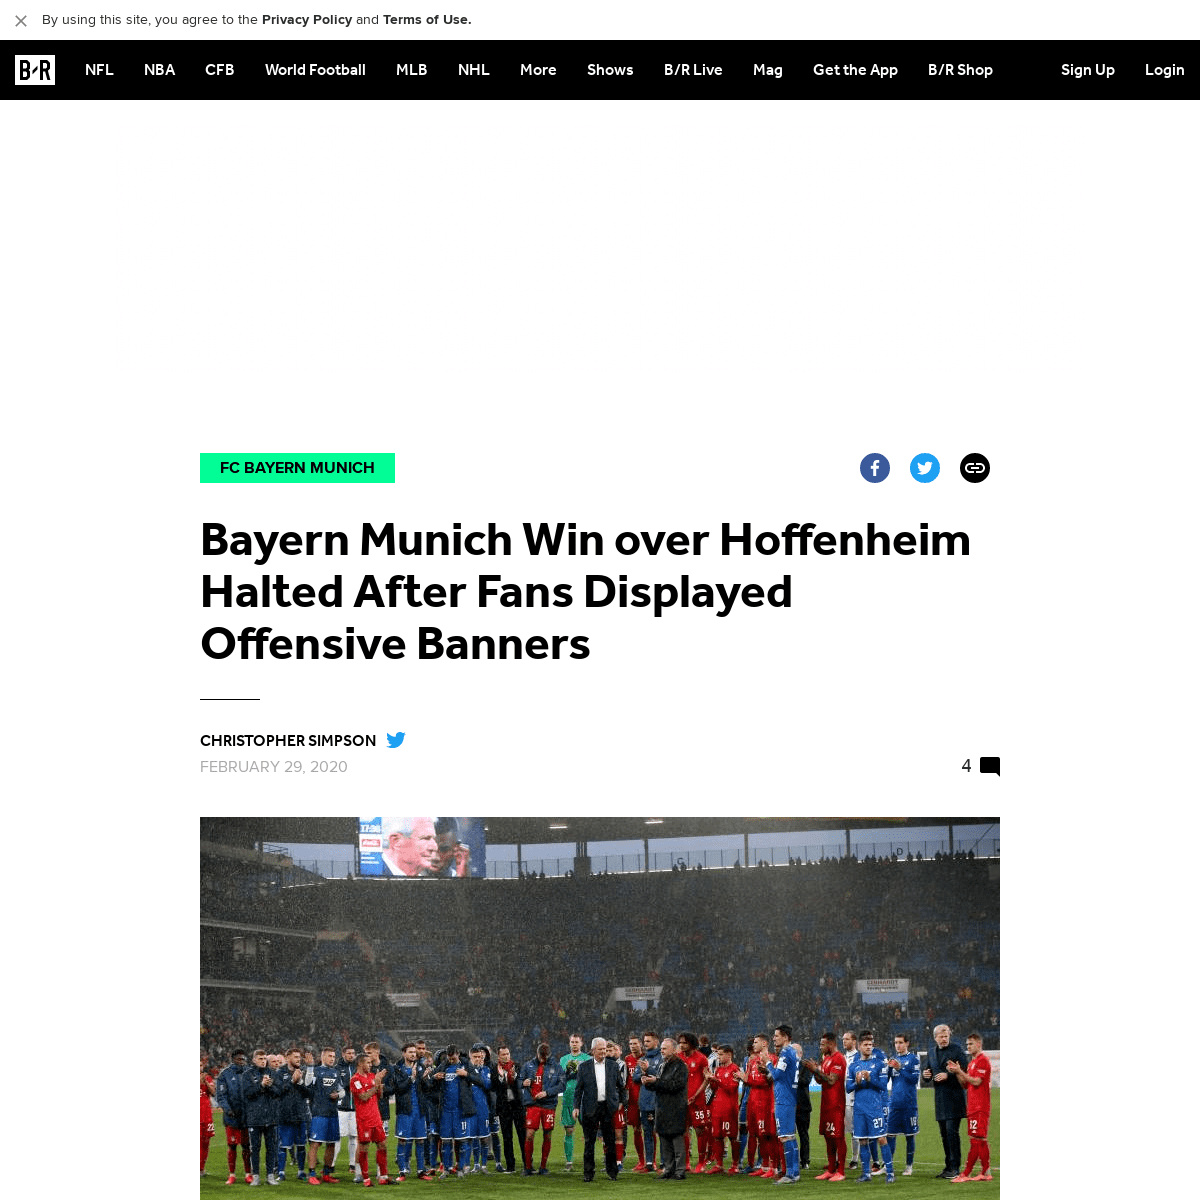 A complete backup of bleacherreport.com/articles/2878555-bayern-munich-win-over-hoffenheim-halted-after-fans-displayed-offensive